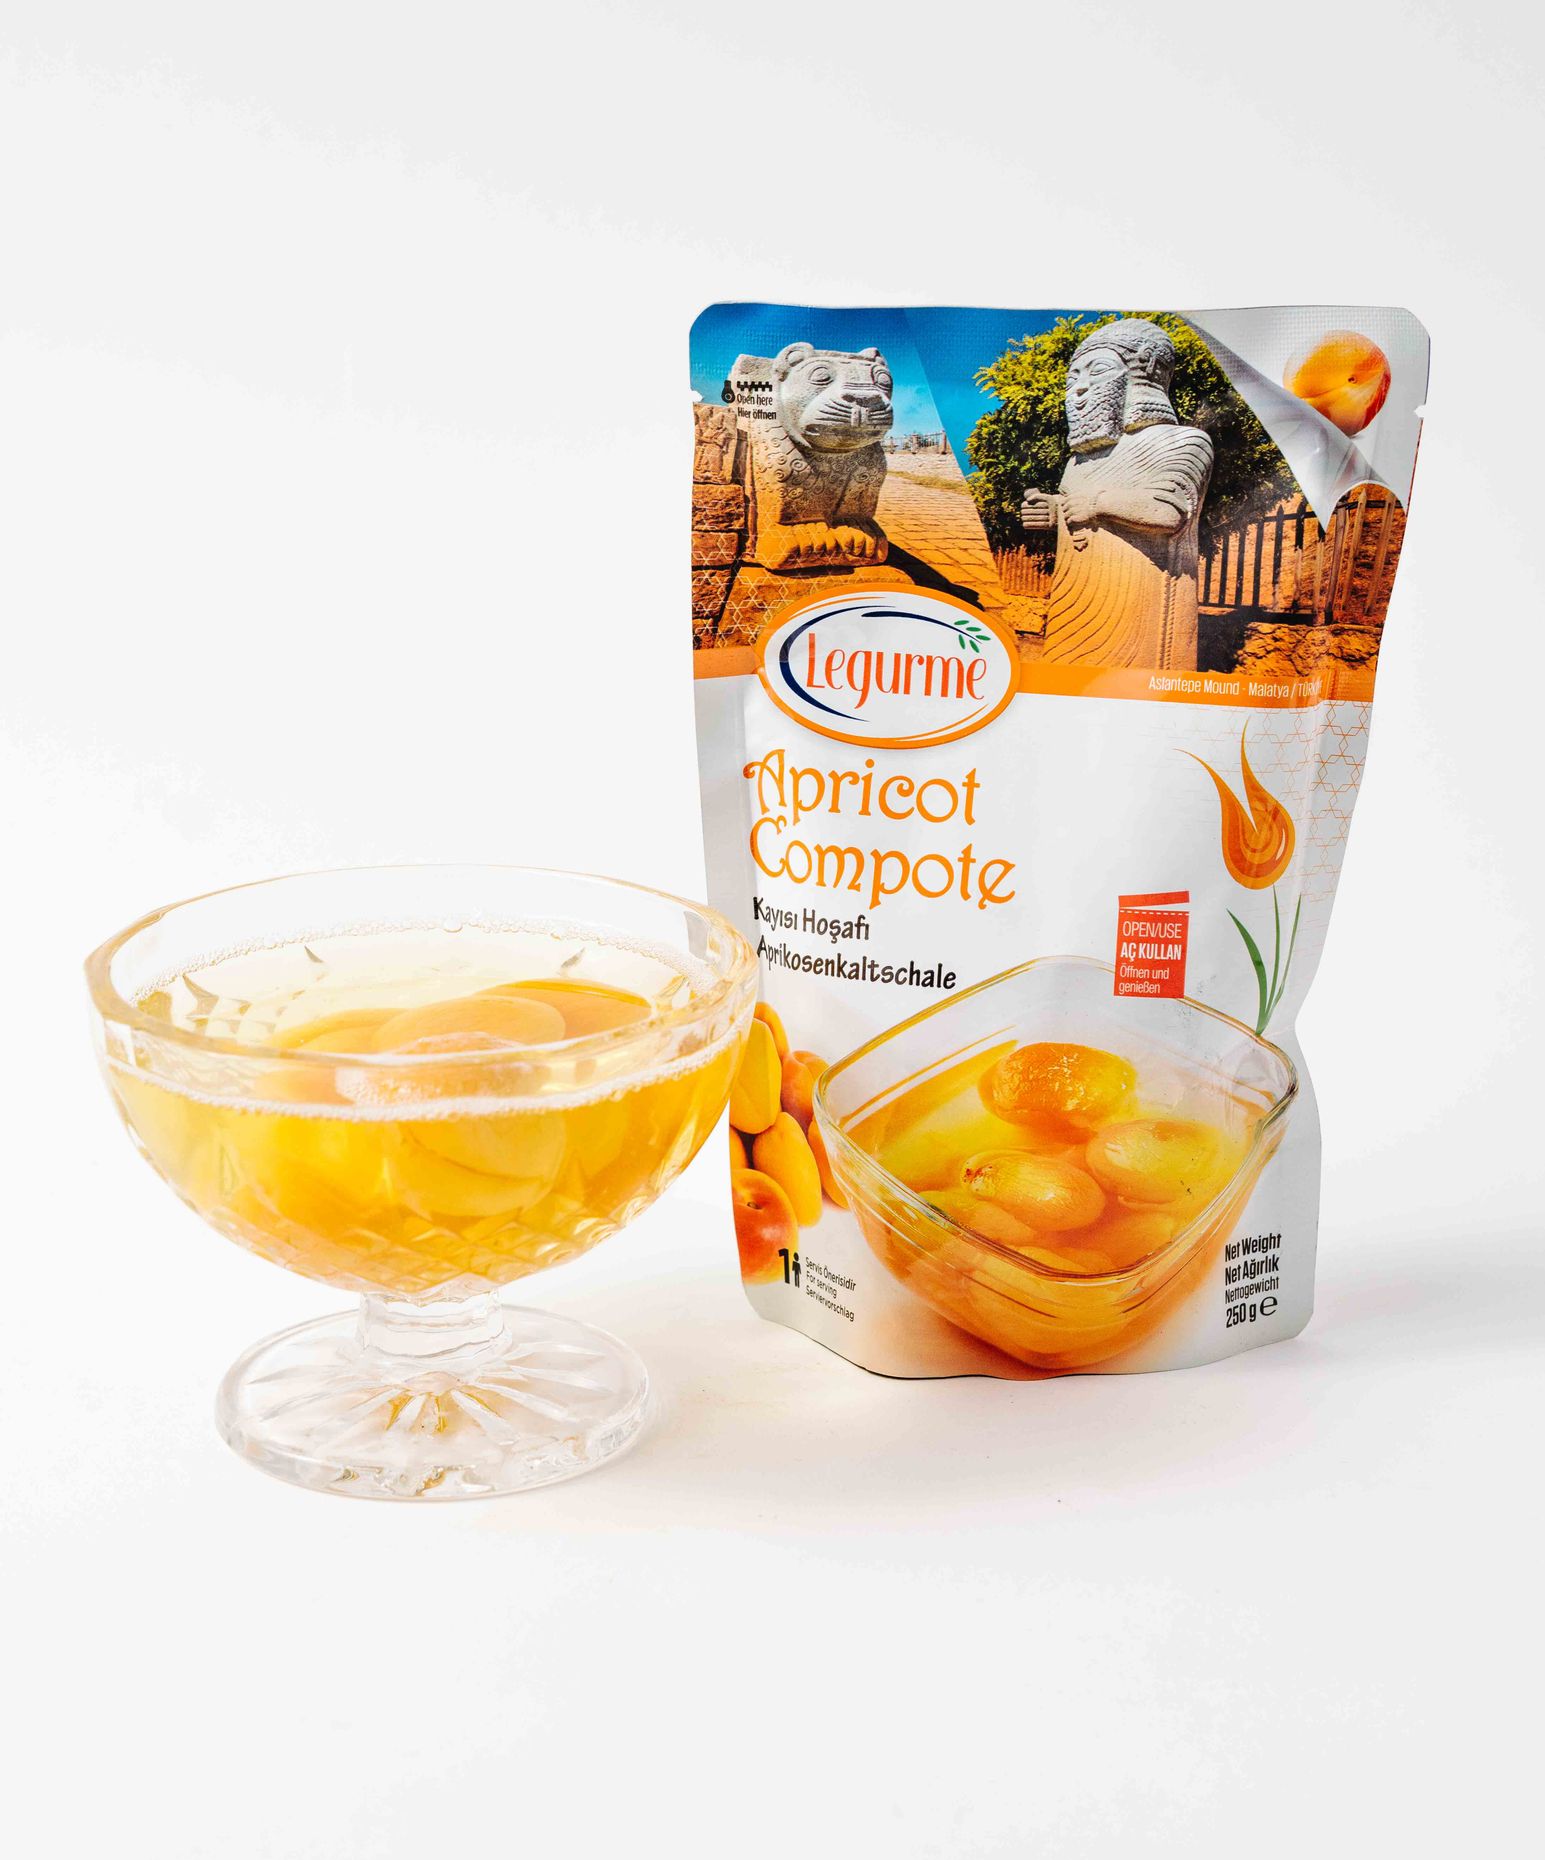 Legurme Apricot Compote